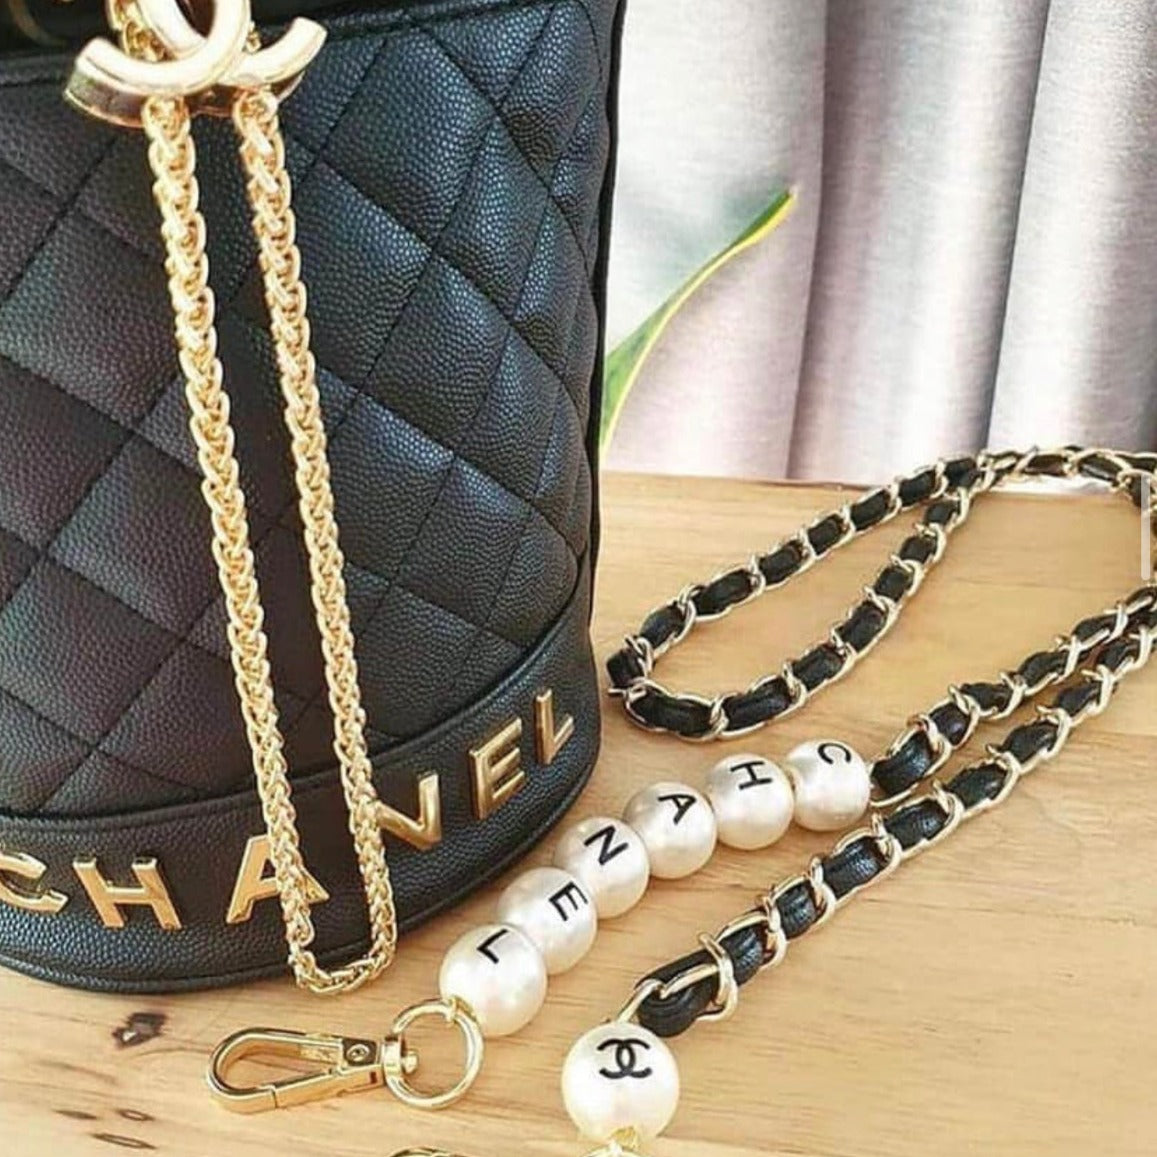 Chanel crossbody VIP Gift Bag  Chanel crossbody, Chanel, Chanel boutique